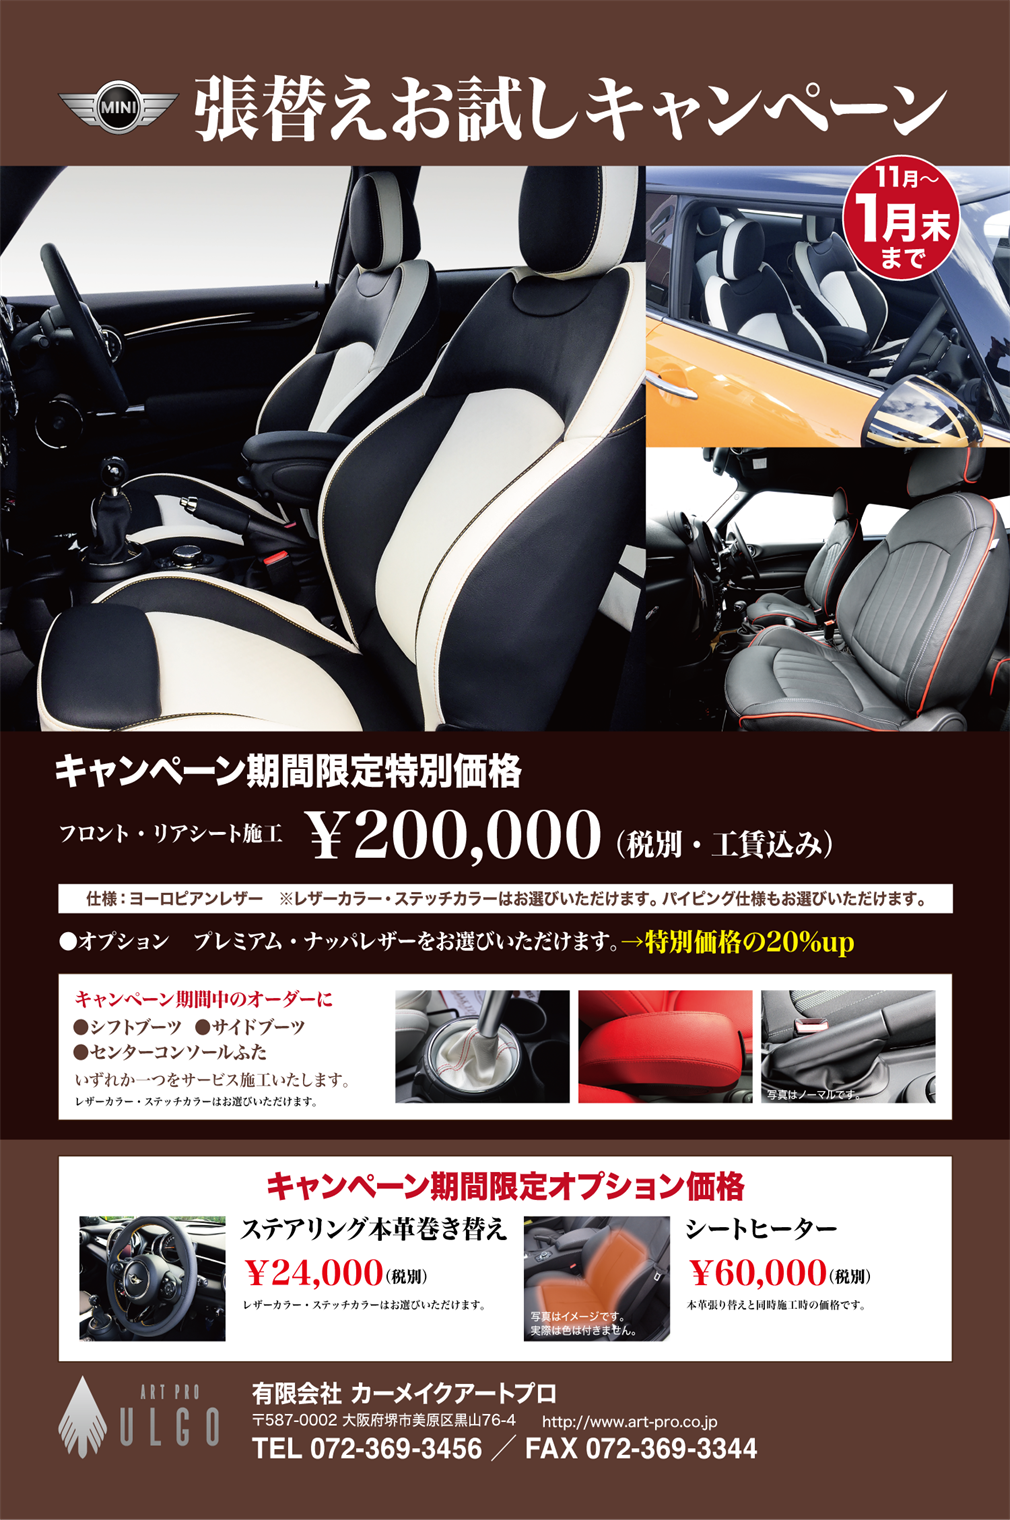 Bmw Mini限定内装張替えキャンペーン 大阪のガラスコーティングはカーメイクアートプロ 車 のコーティングで大切な愛車をいつまでも美しく 職人の鍛錬 進化する技術